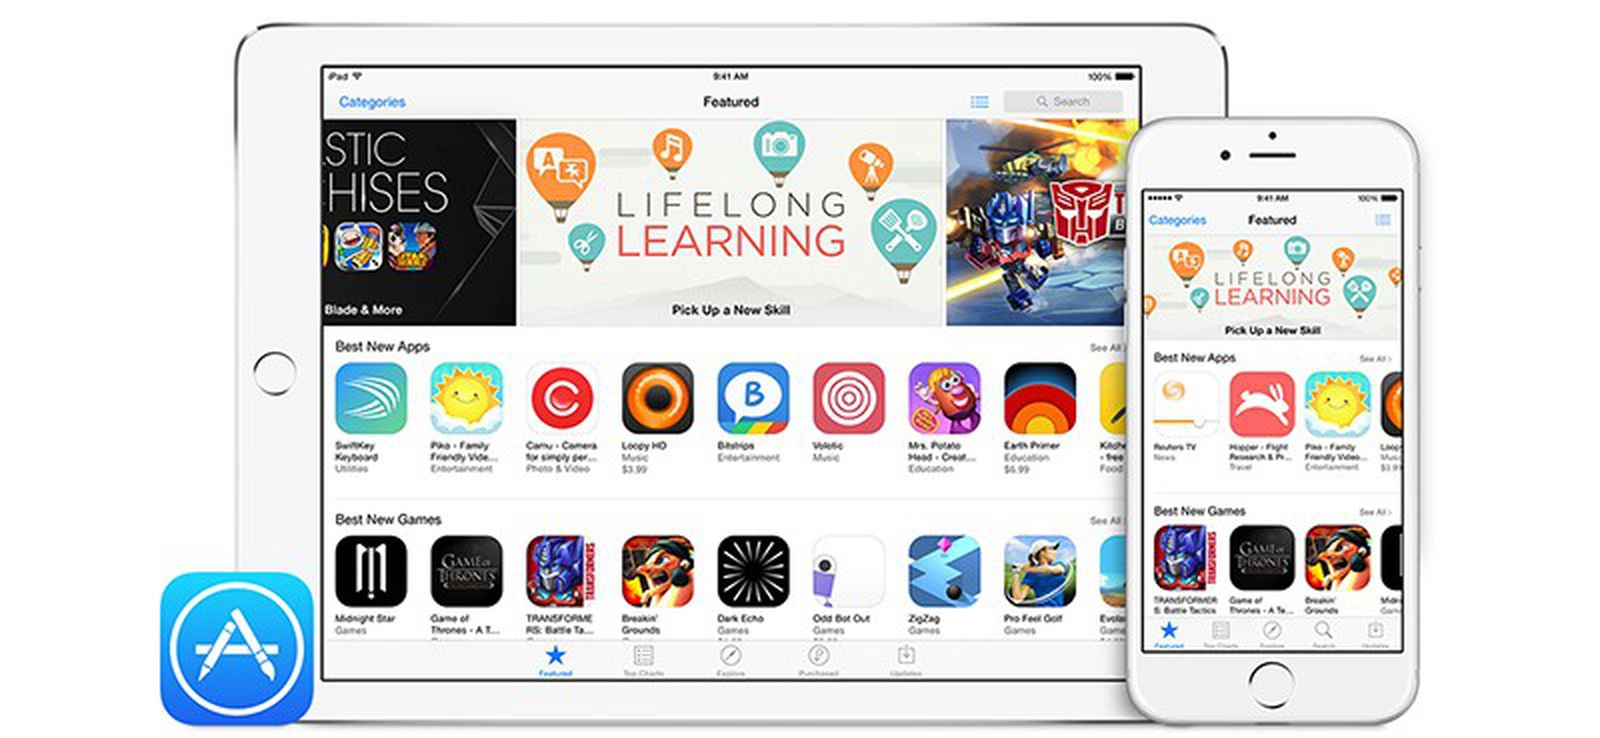 Best new apps. Приложения Apple. Магазин приложений Apple. Магазин приложений для айфона. IPOD app Store.